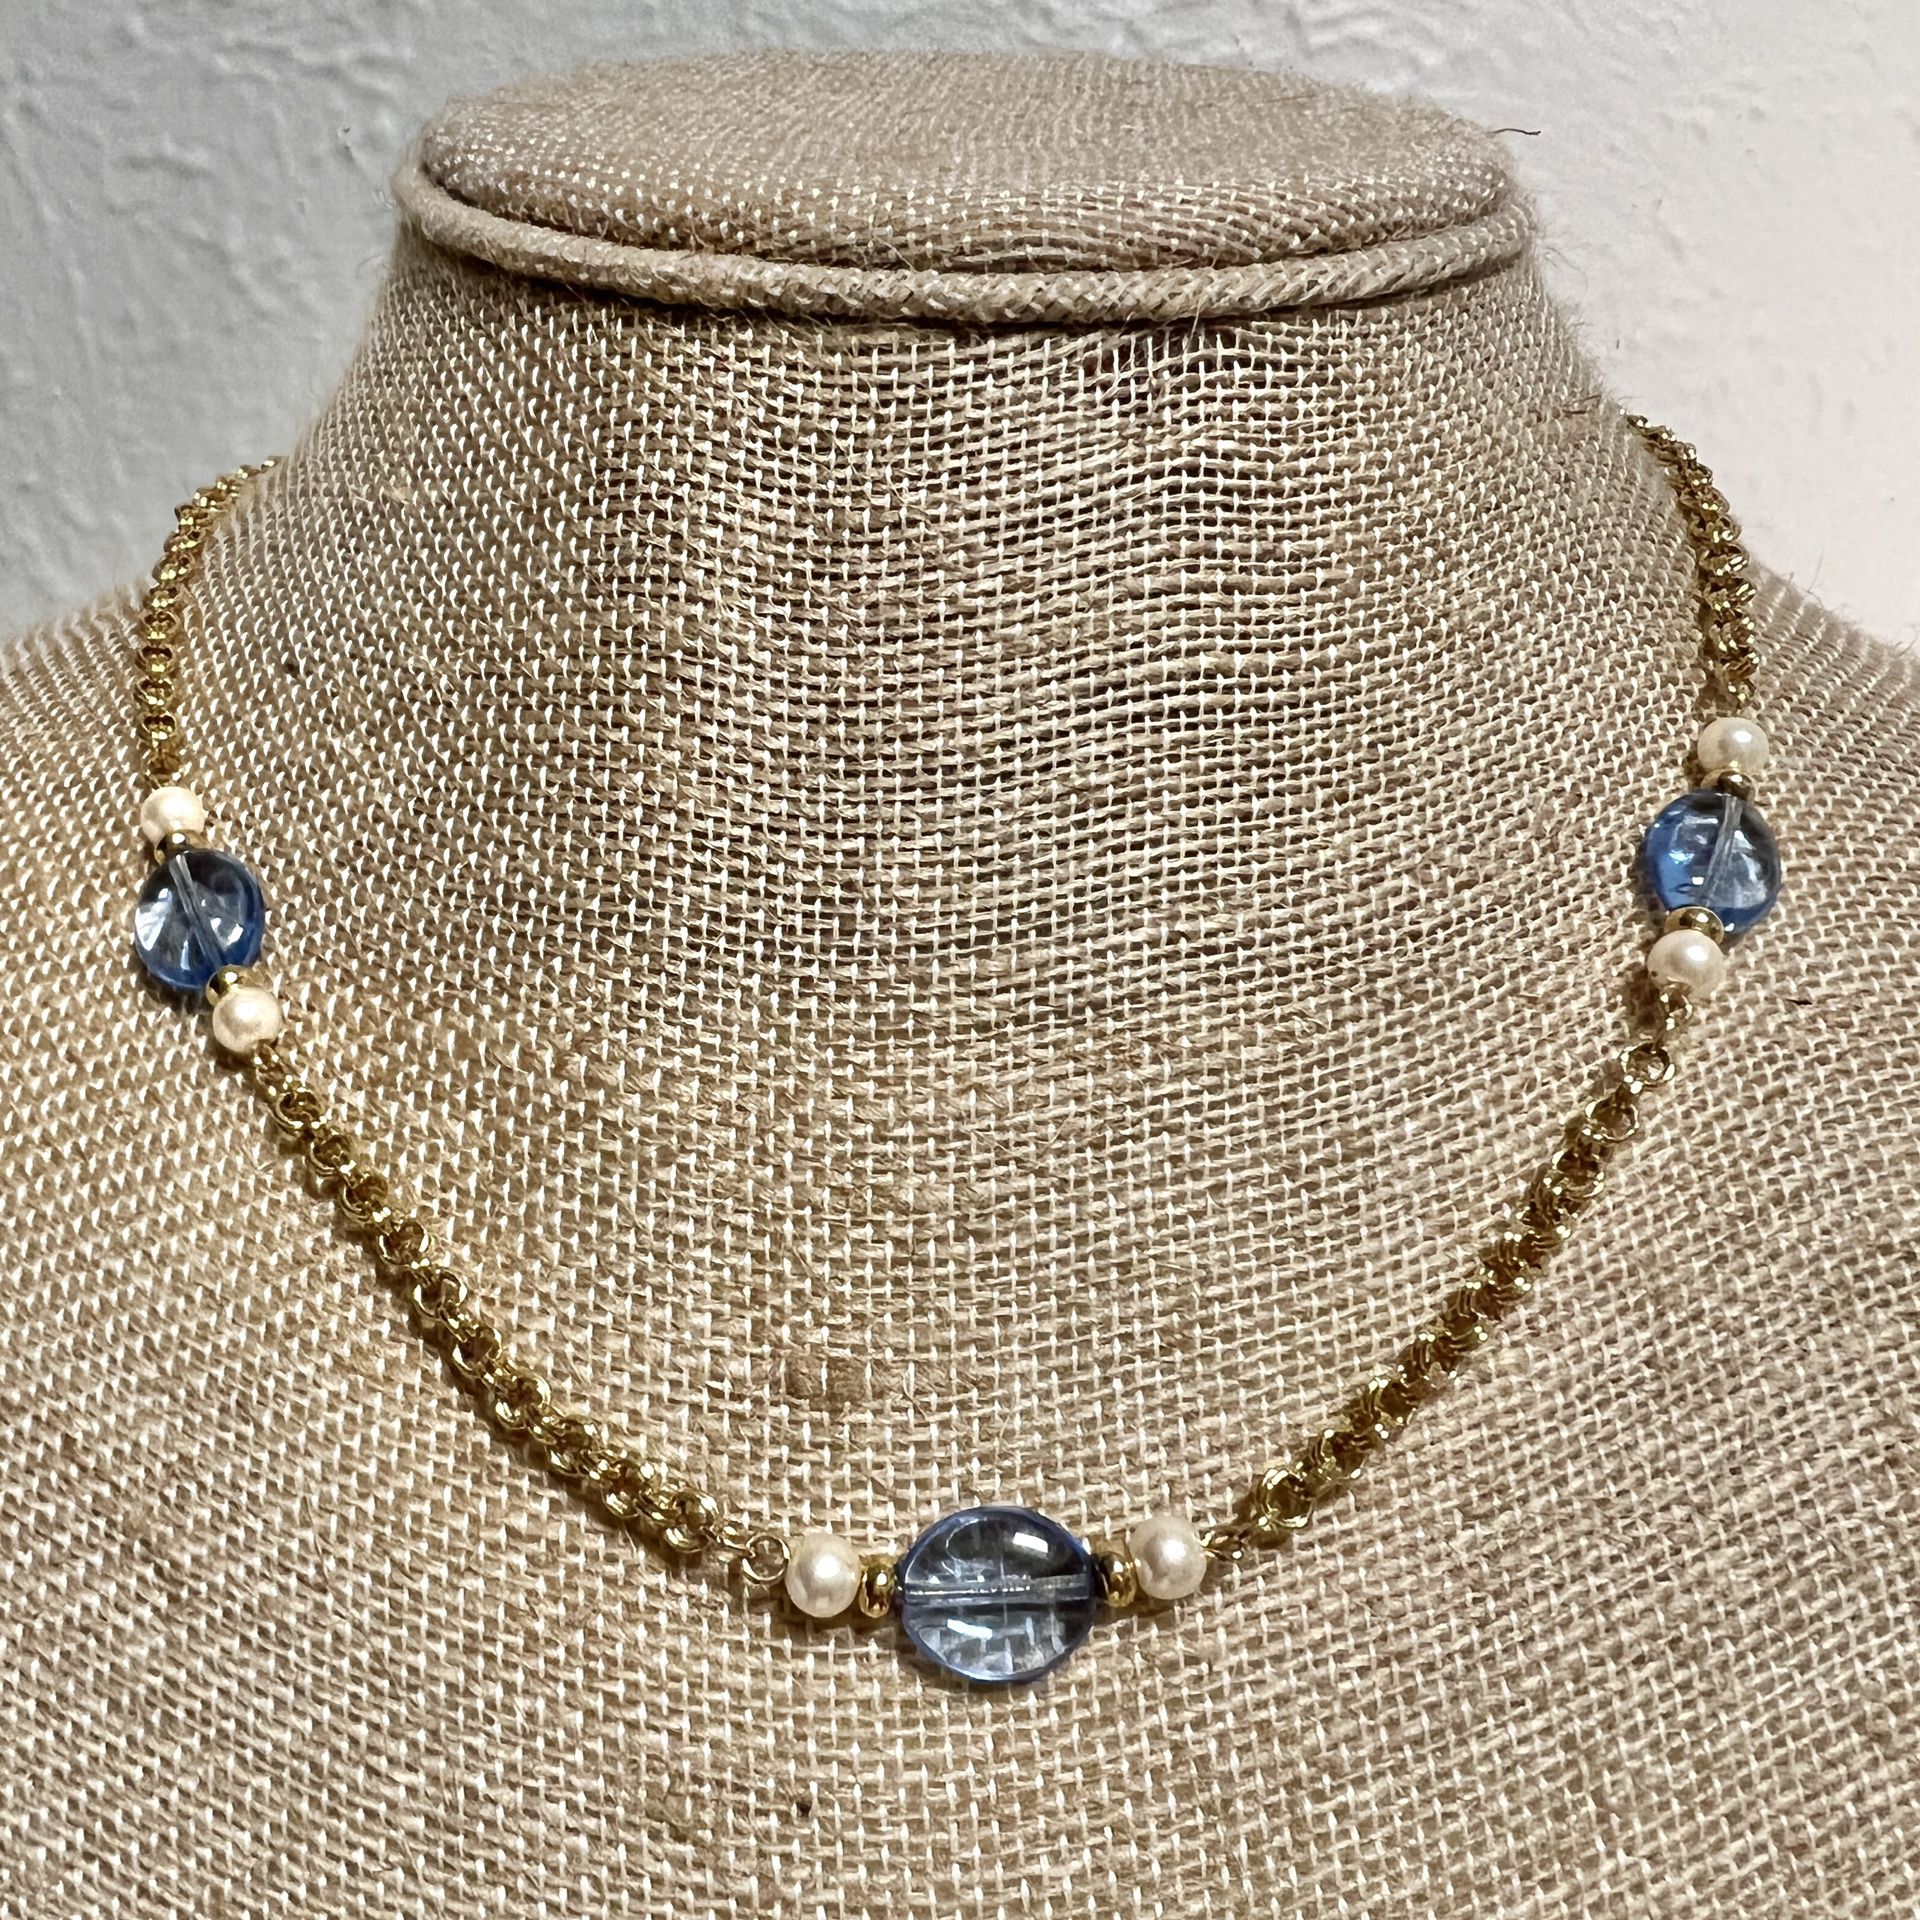 Vintage AVON blue pressed glass Gold tone Necklace